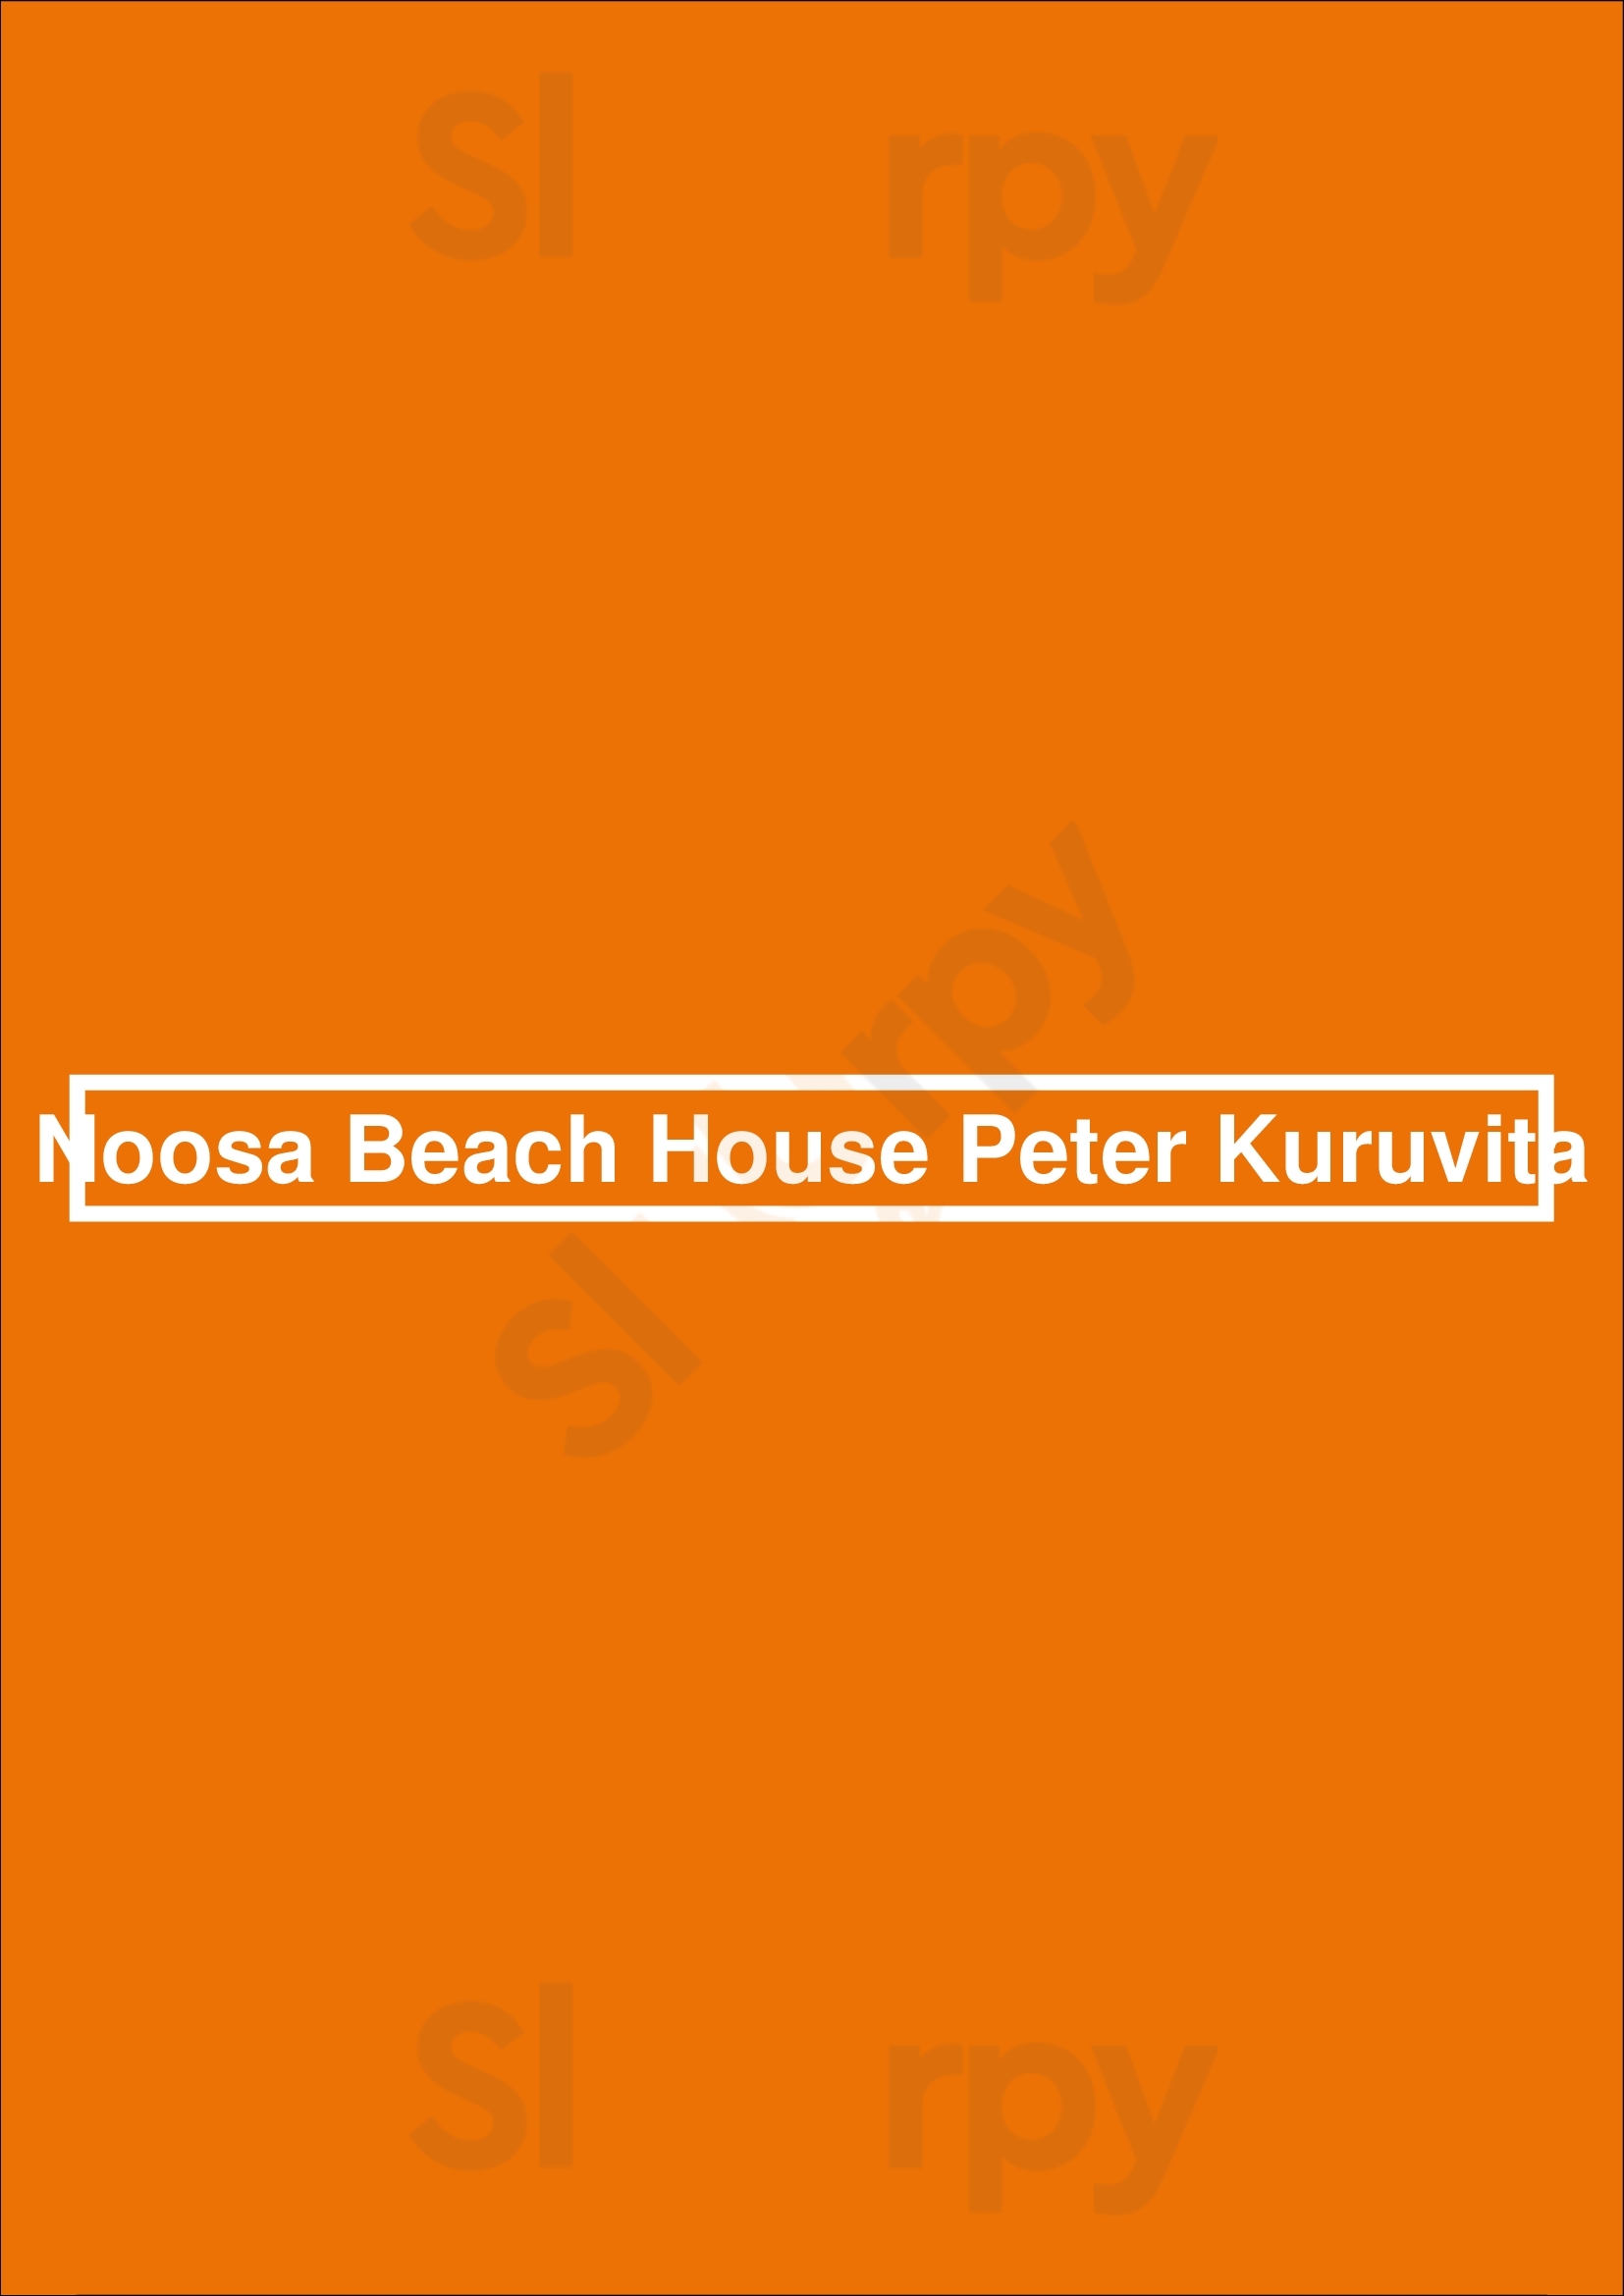 Noosa Beach House Noosa Menu - 1